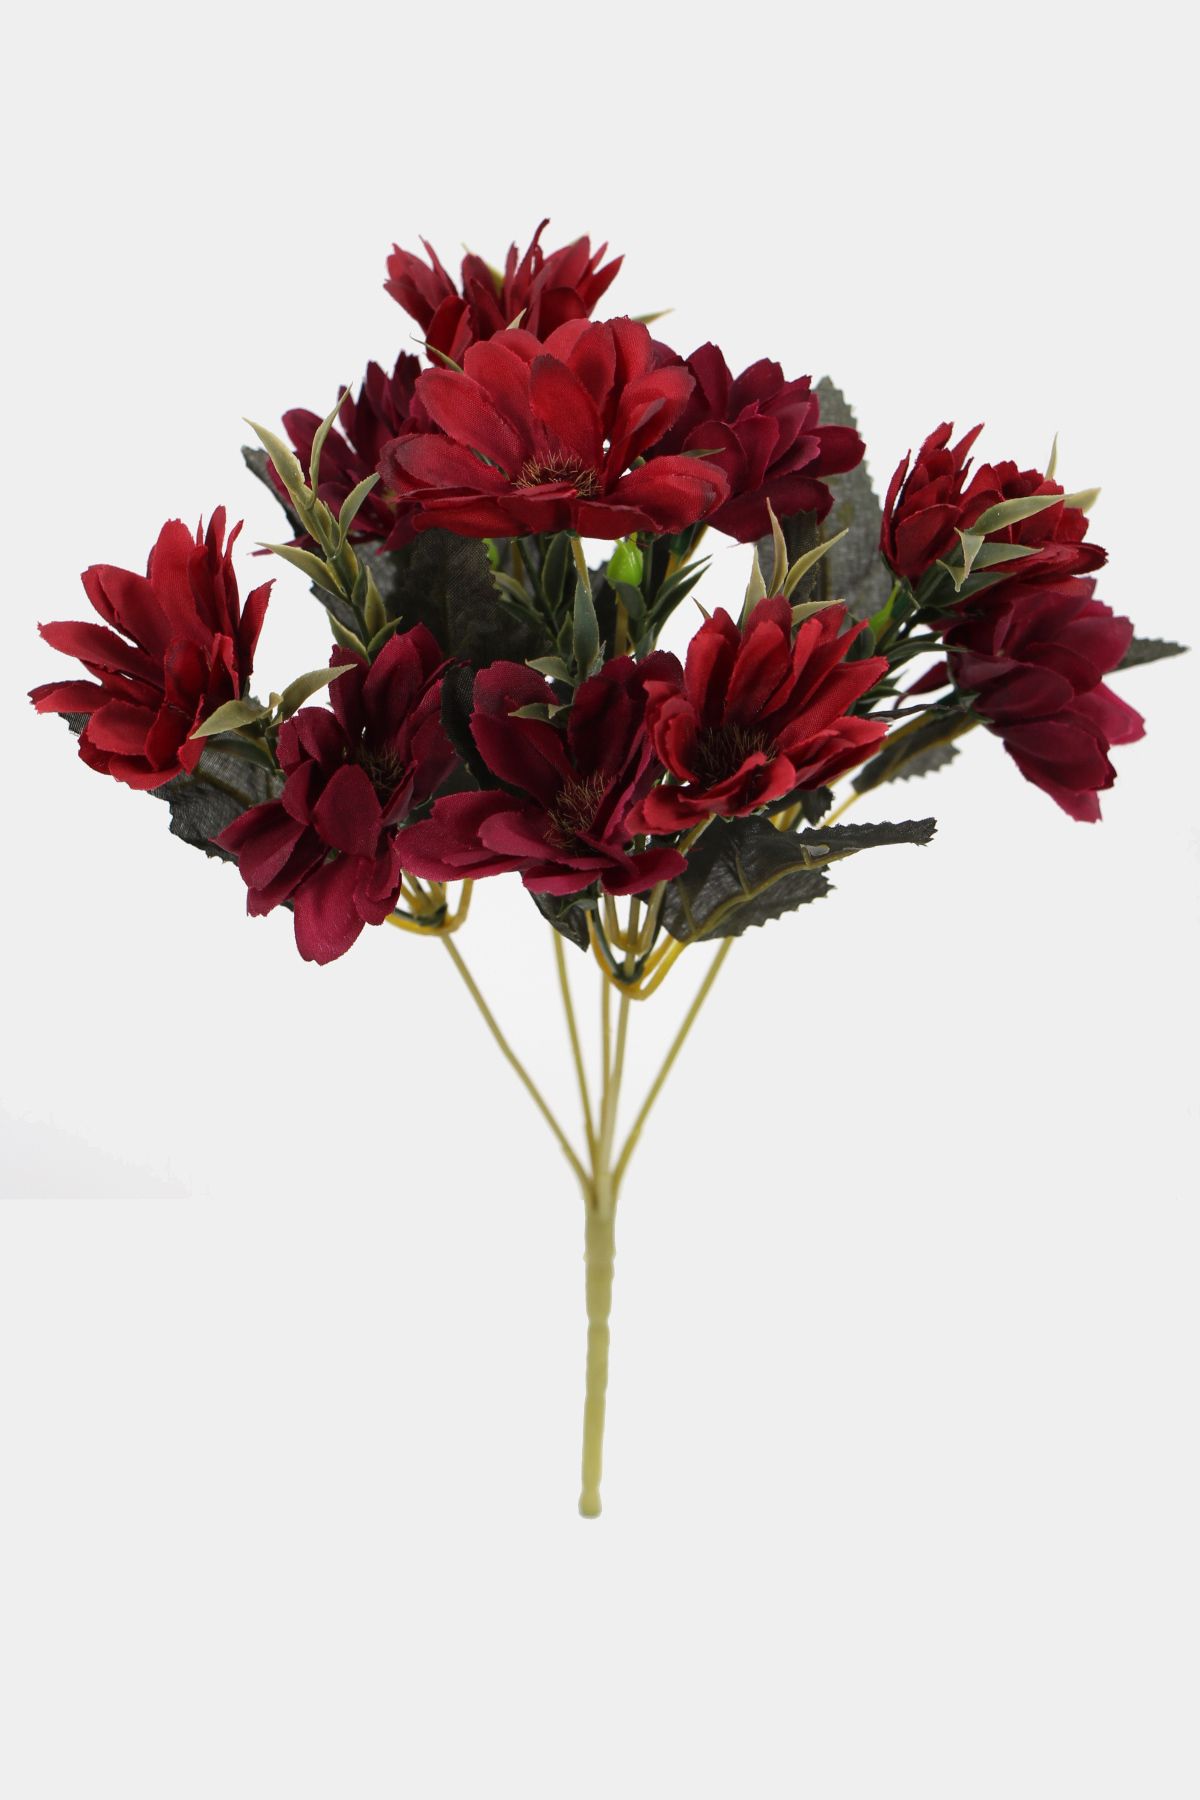 Yapay Çiçek Deposu Yapay 10lu İri Papatya Demeti 30 cm Bordo-Kırmızı